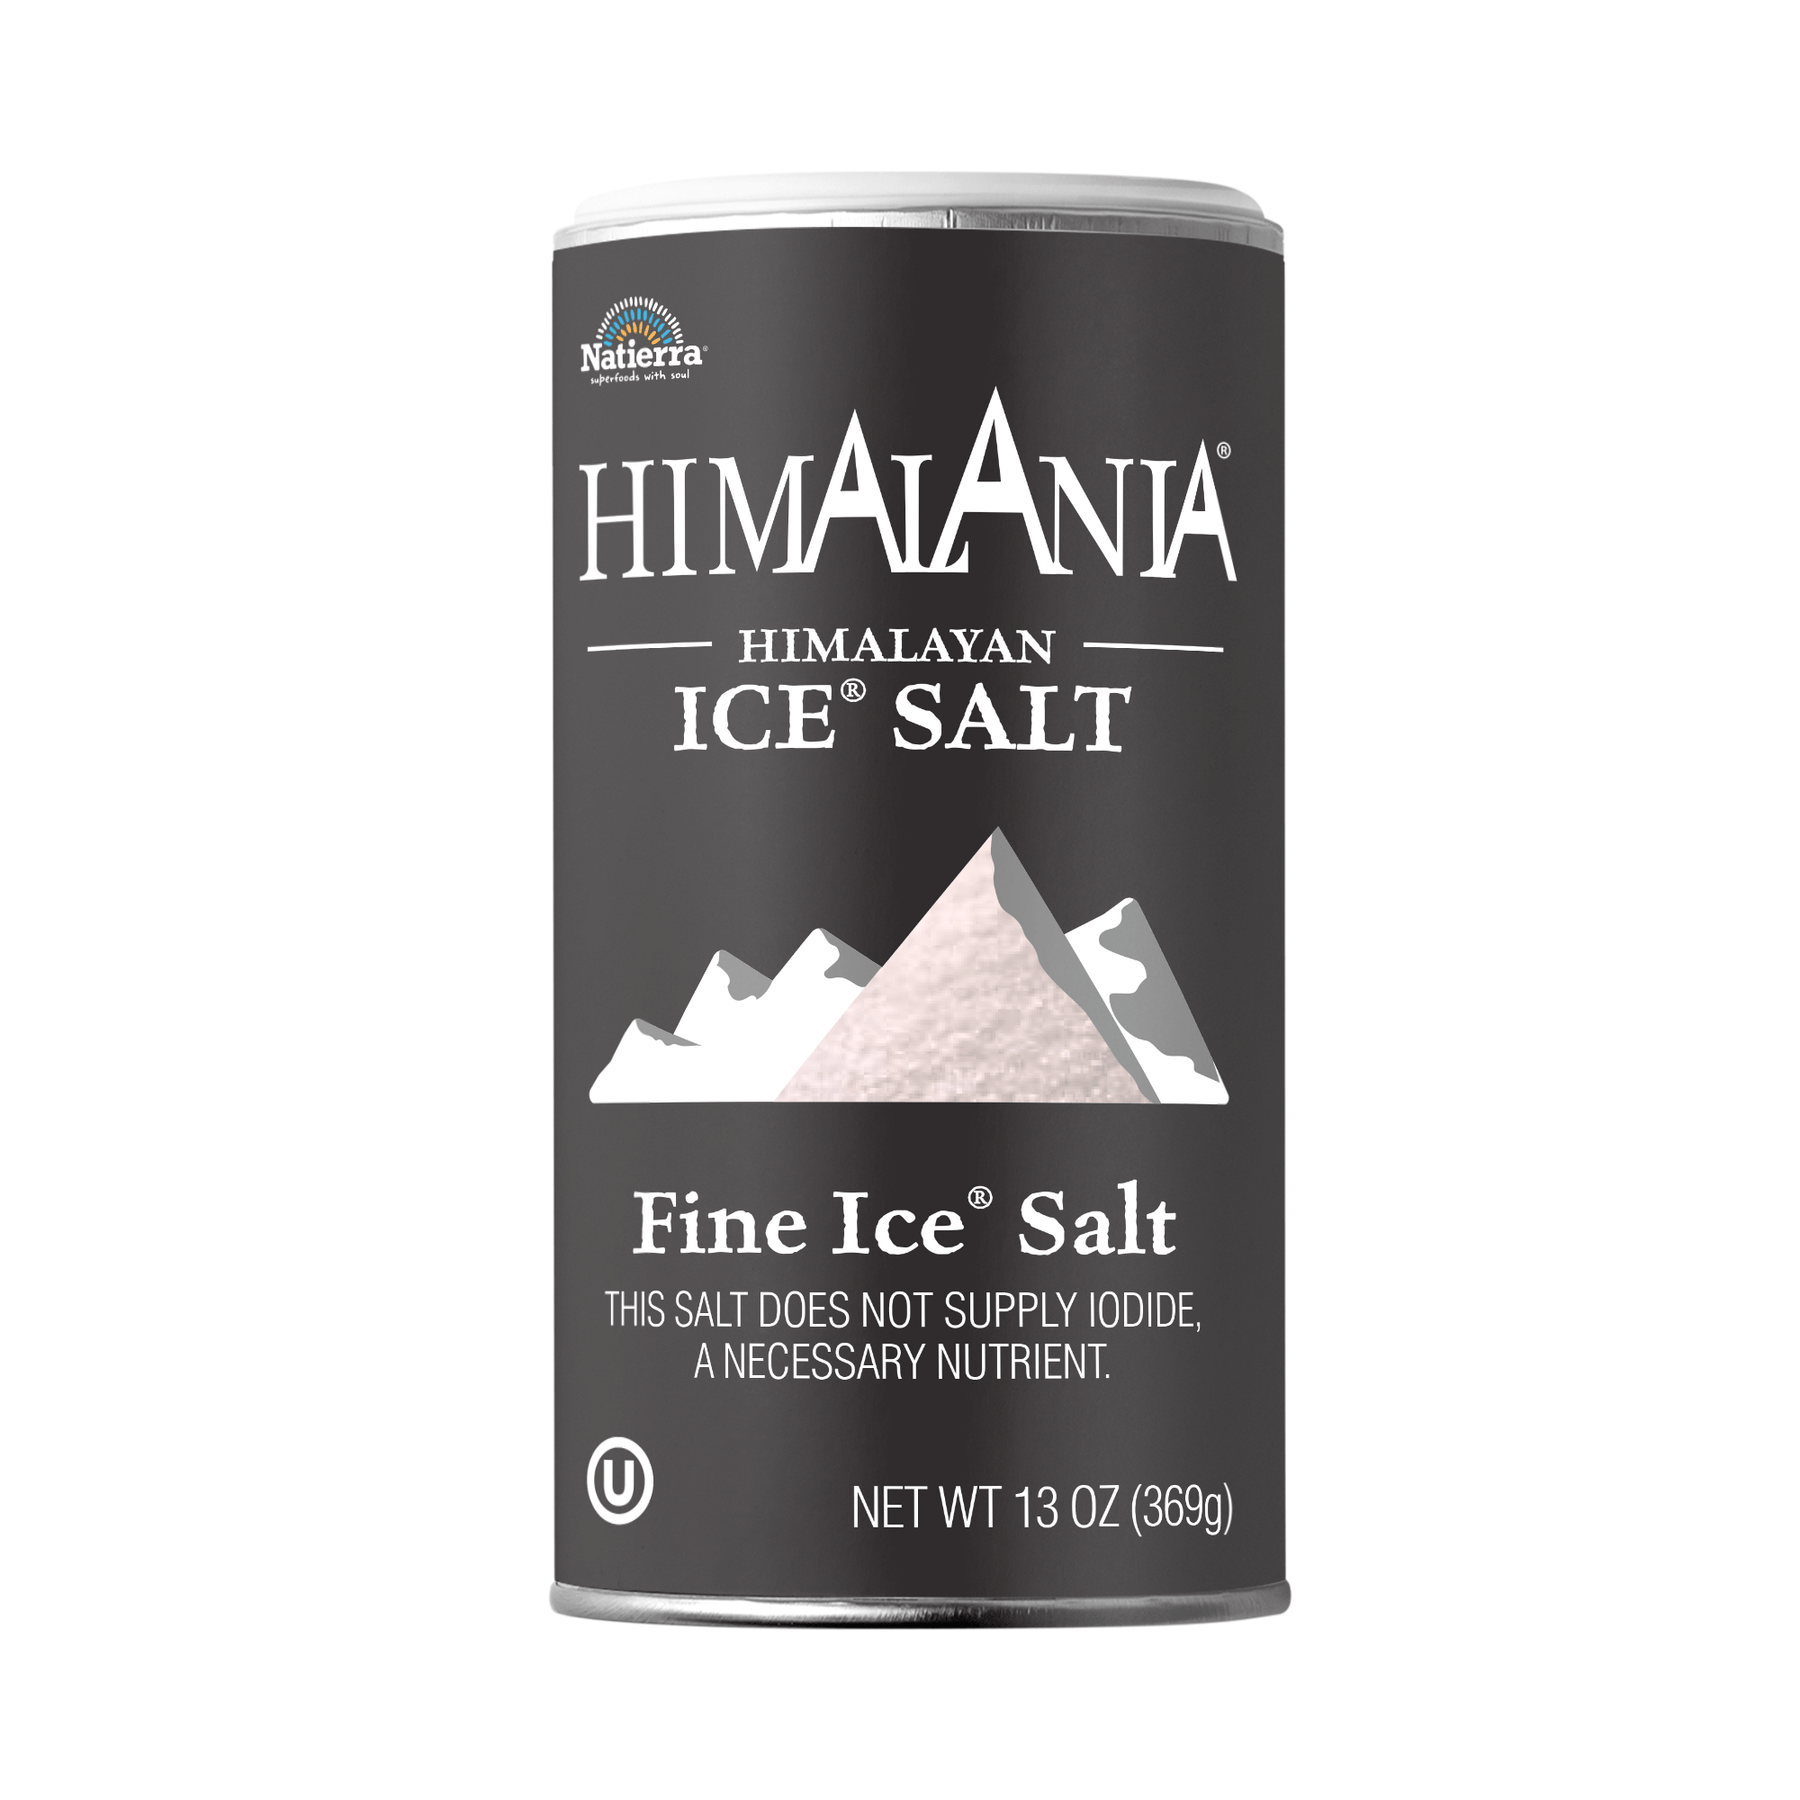 Natierra Himalania Ice Salt 13 oz shaker